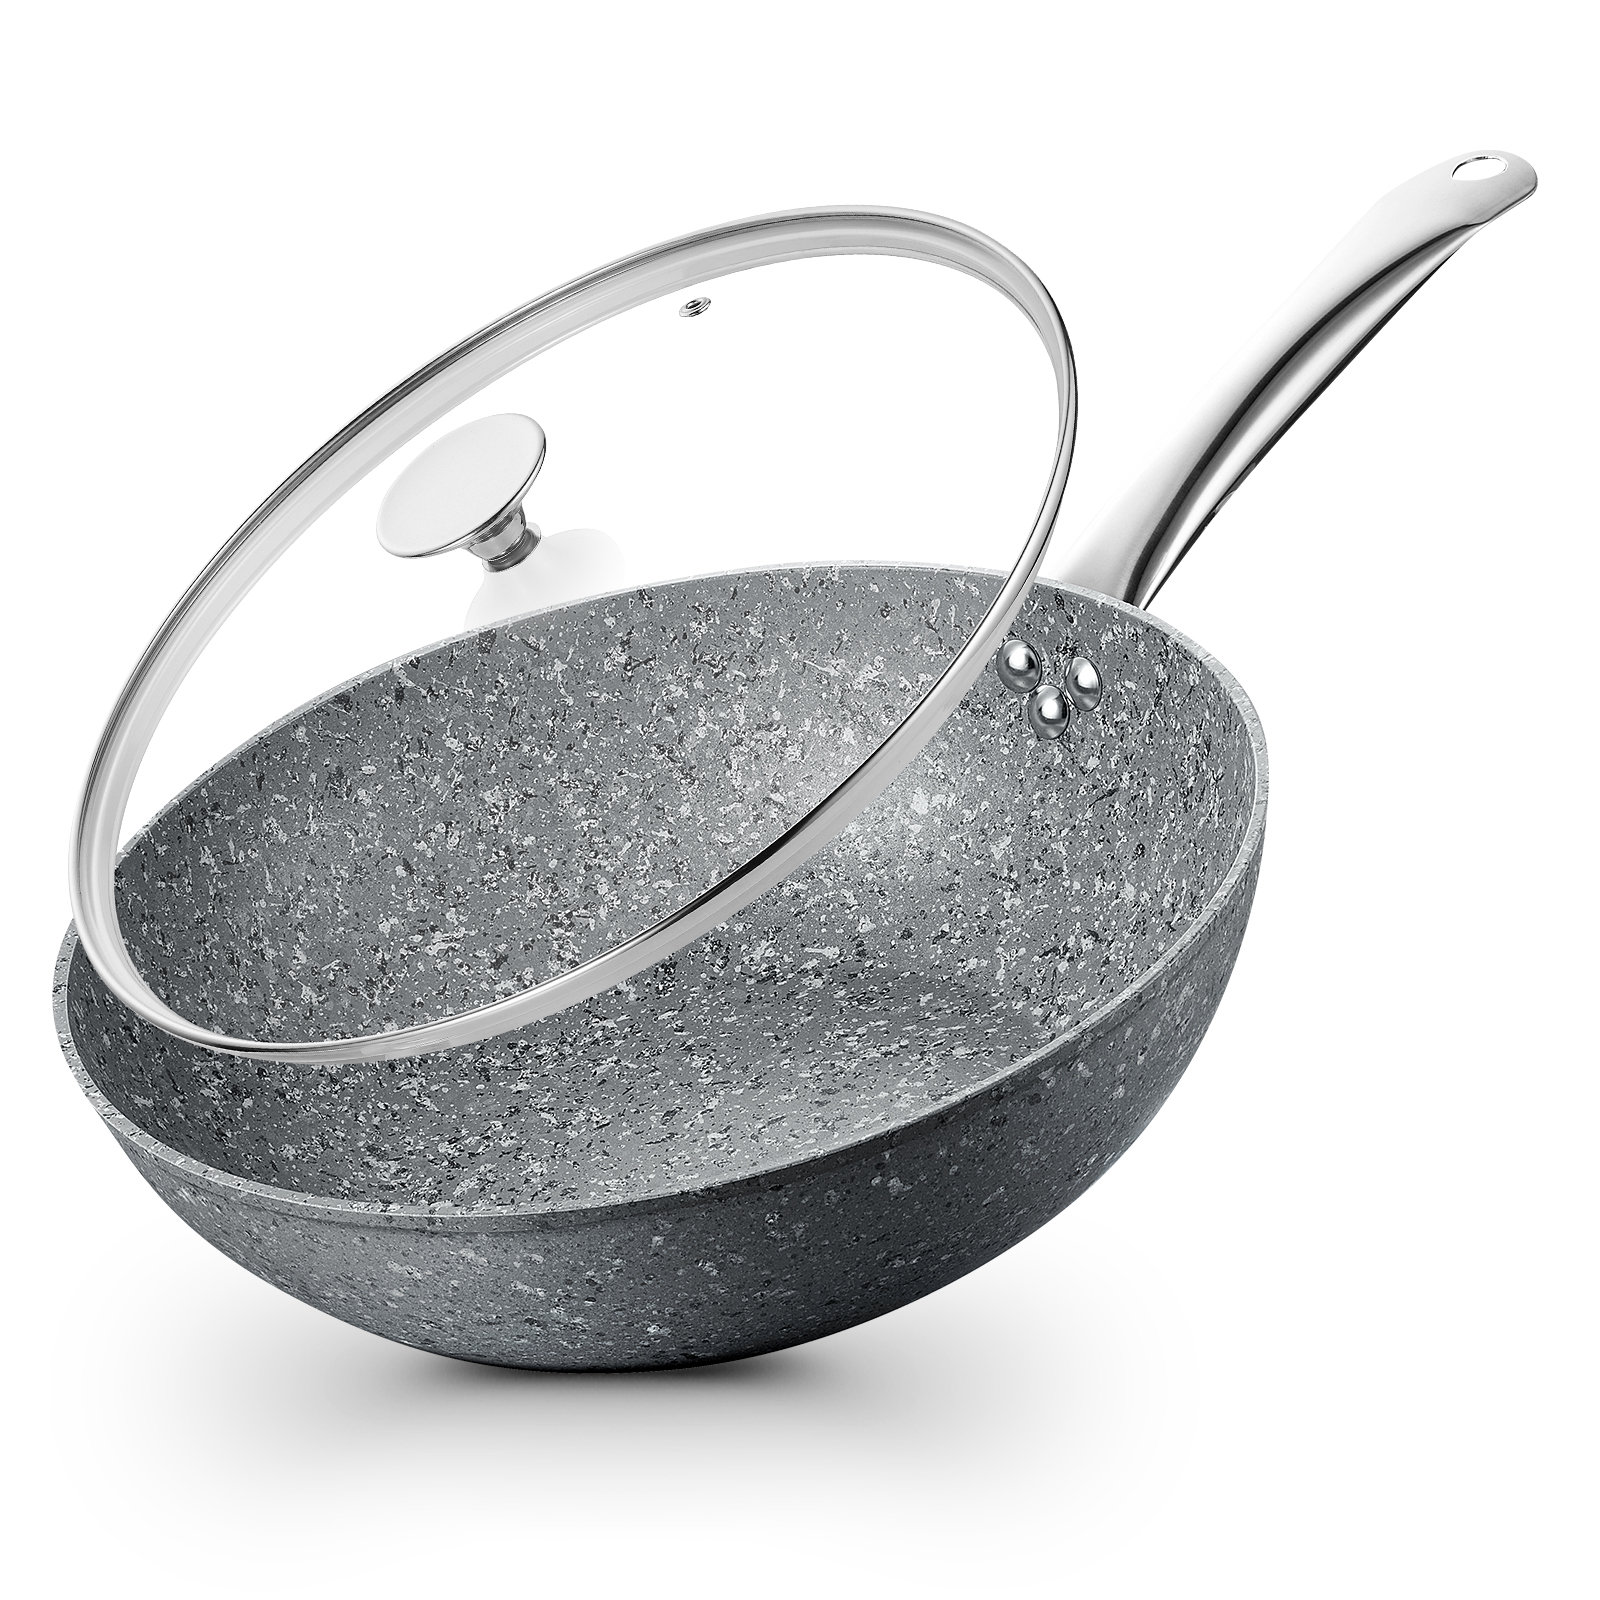 10 Inch Frying Pan with Lid, Nonstick Frying Pan with Lid, Frying Pan with  100% APEO & PFOA-Free Stone-Derived Non-Stick Coating, Nonstick Granite